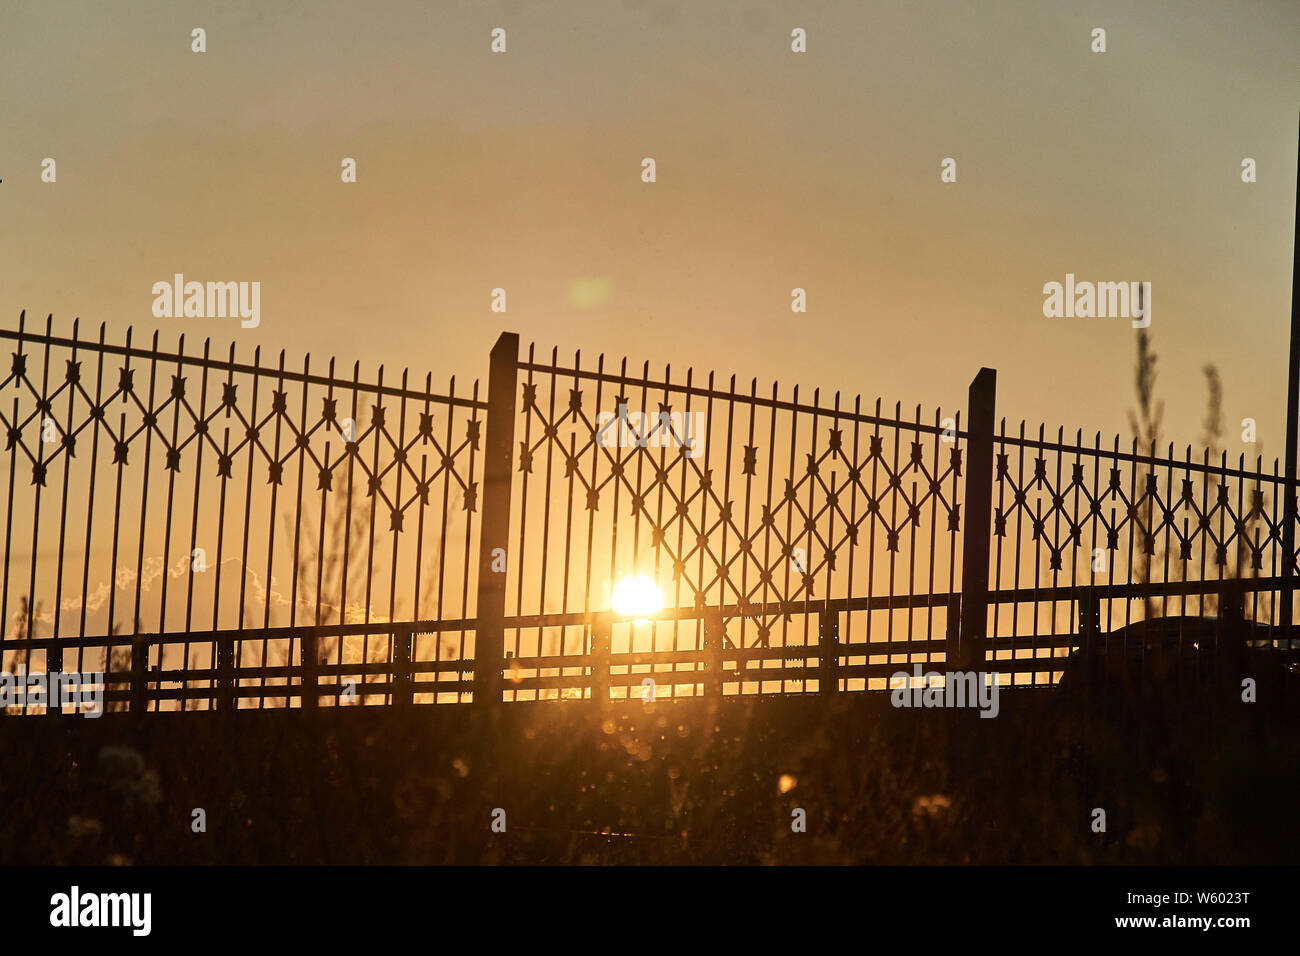 fence against the setting sun. backlit photo Stock Photo